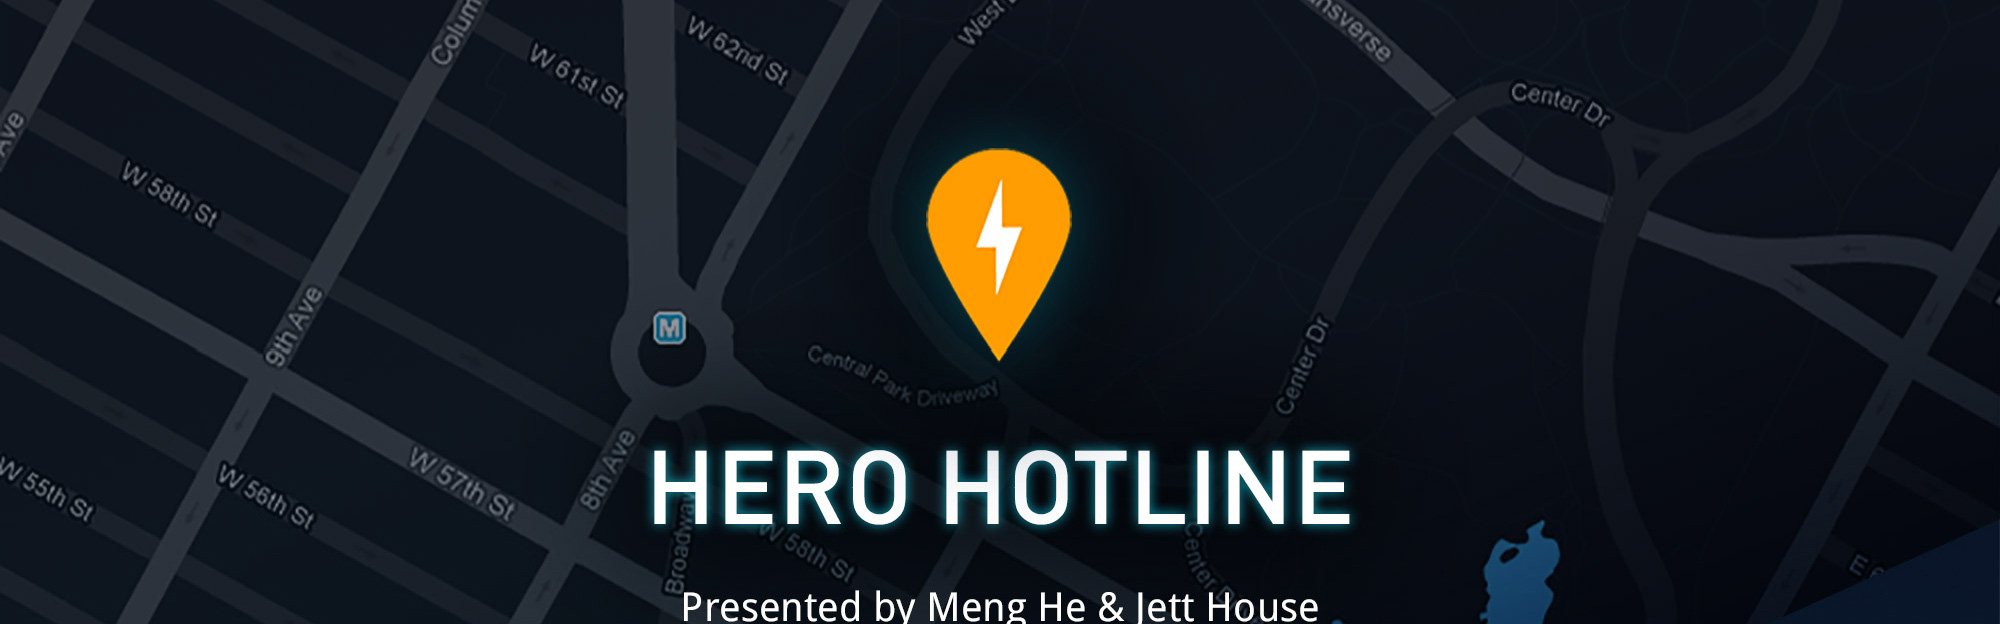 meng-he-herohotline-panel01a2